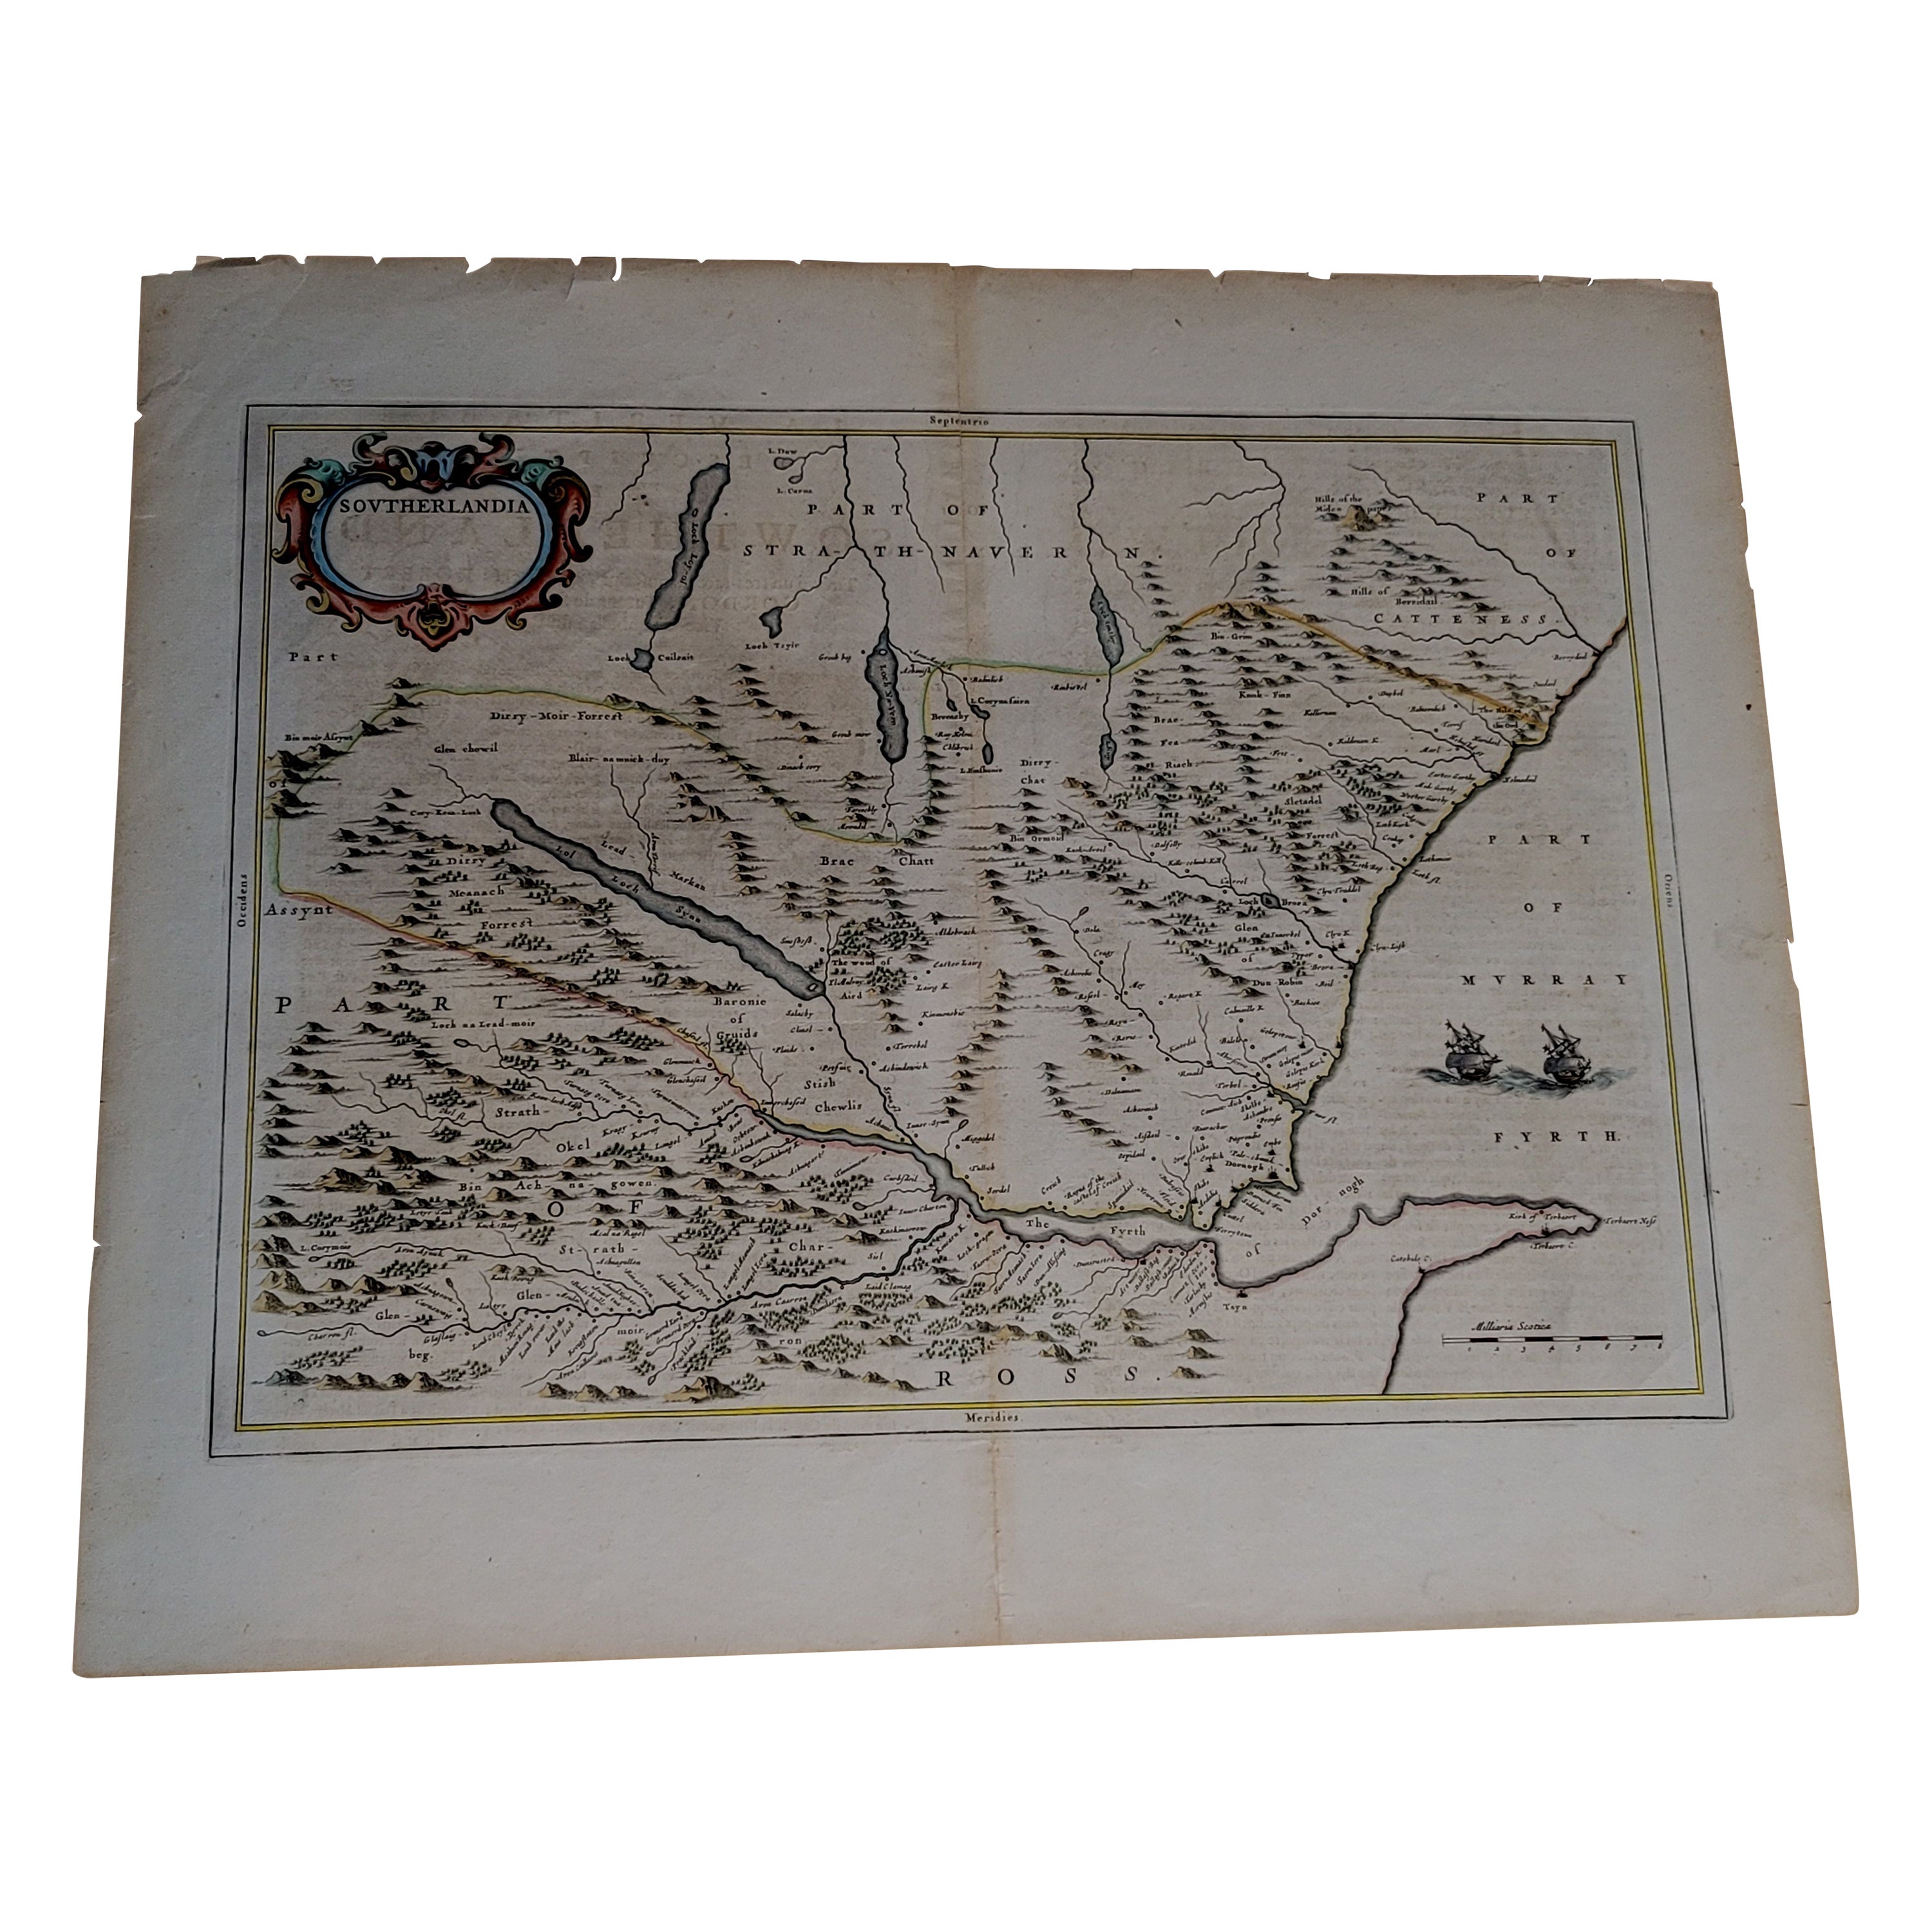 1654 Joan Blaeu Map the Sutherland, Scotland, Entitled "Southerlandia, "Ric0007